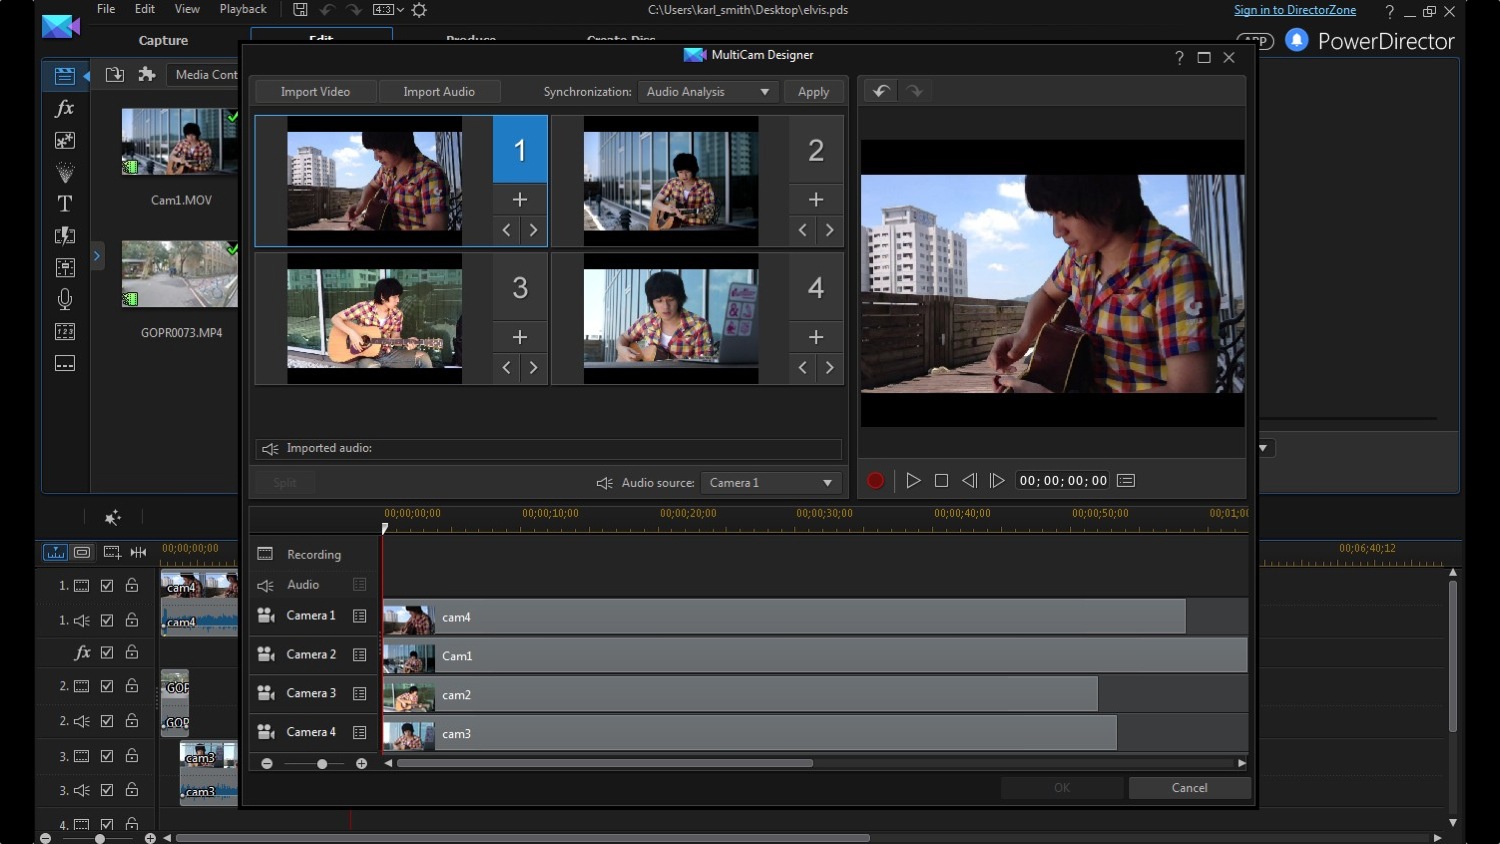 cyberlink director suite 4s new features include action cam video editing multicam designer enu